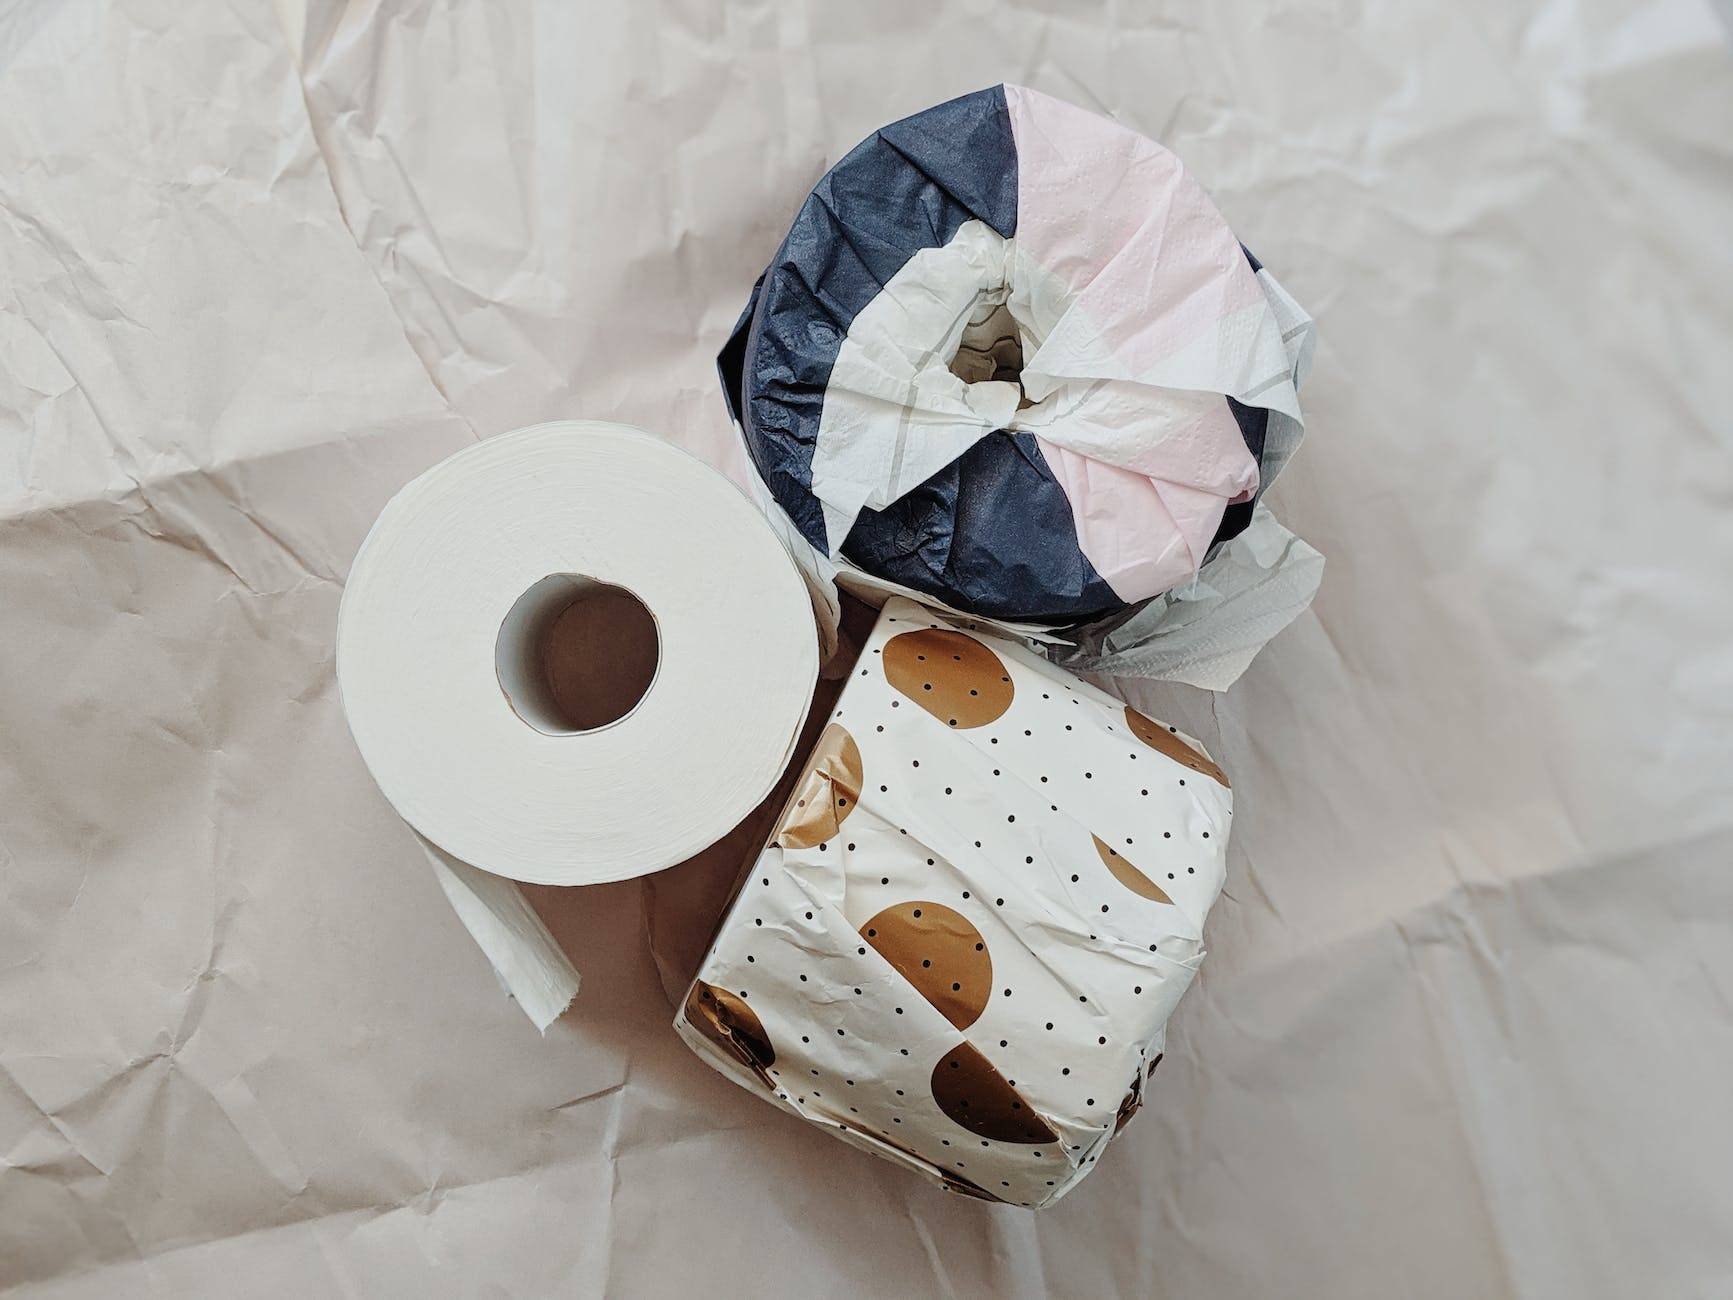 toilet paper rolls in packaging